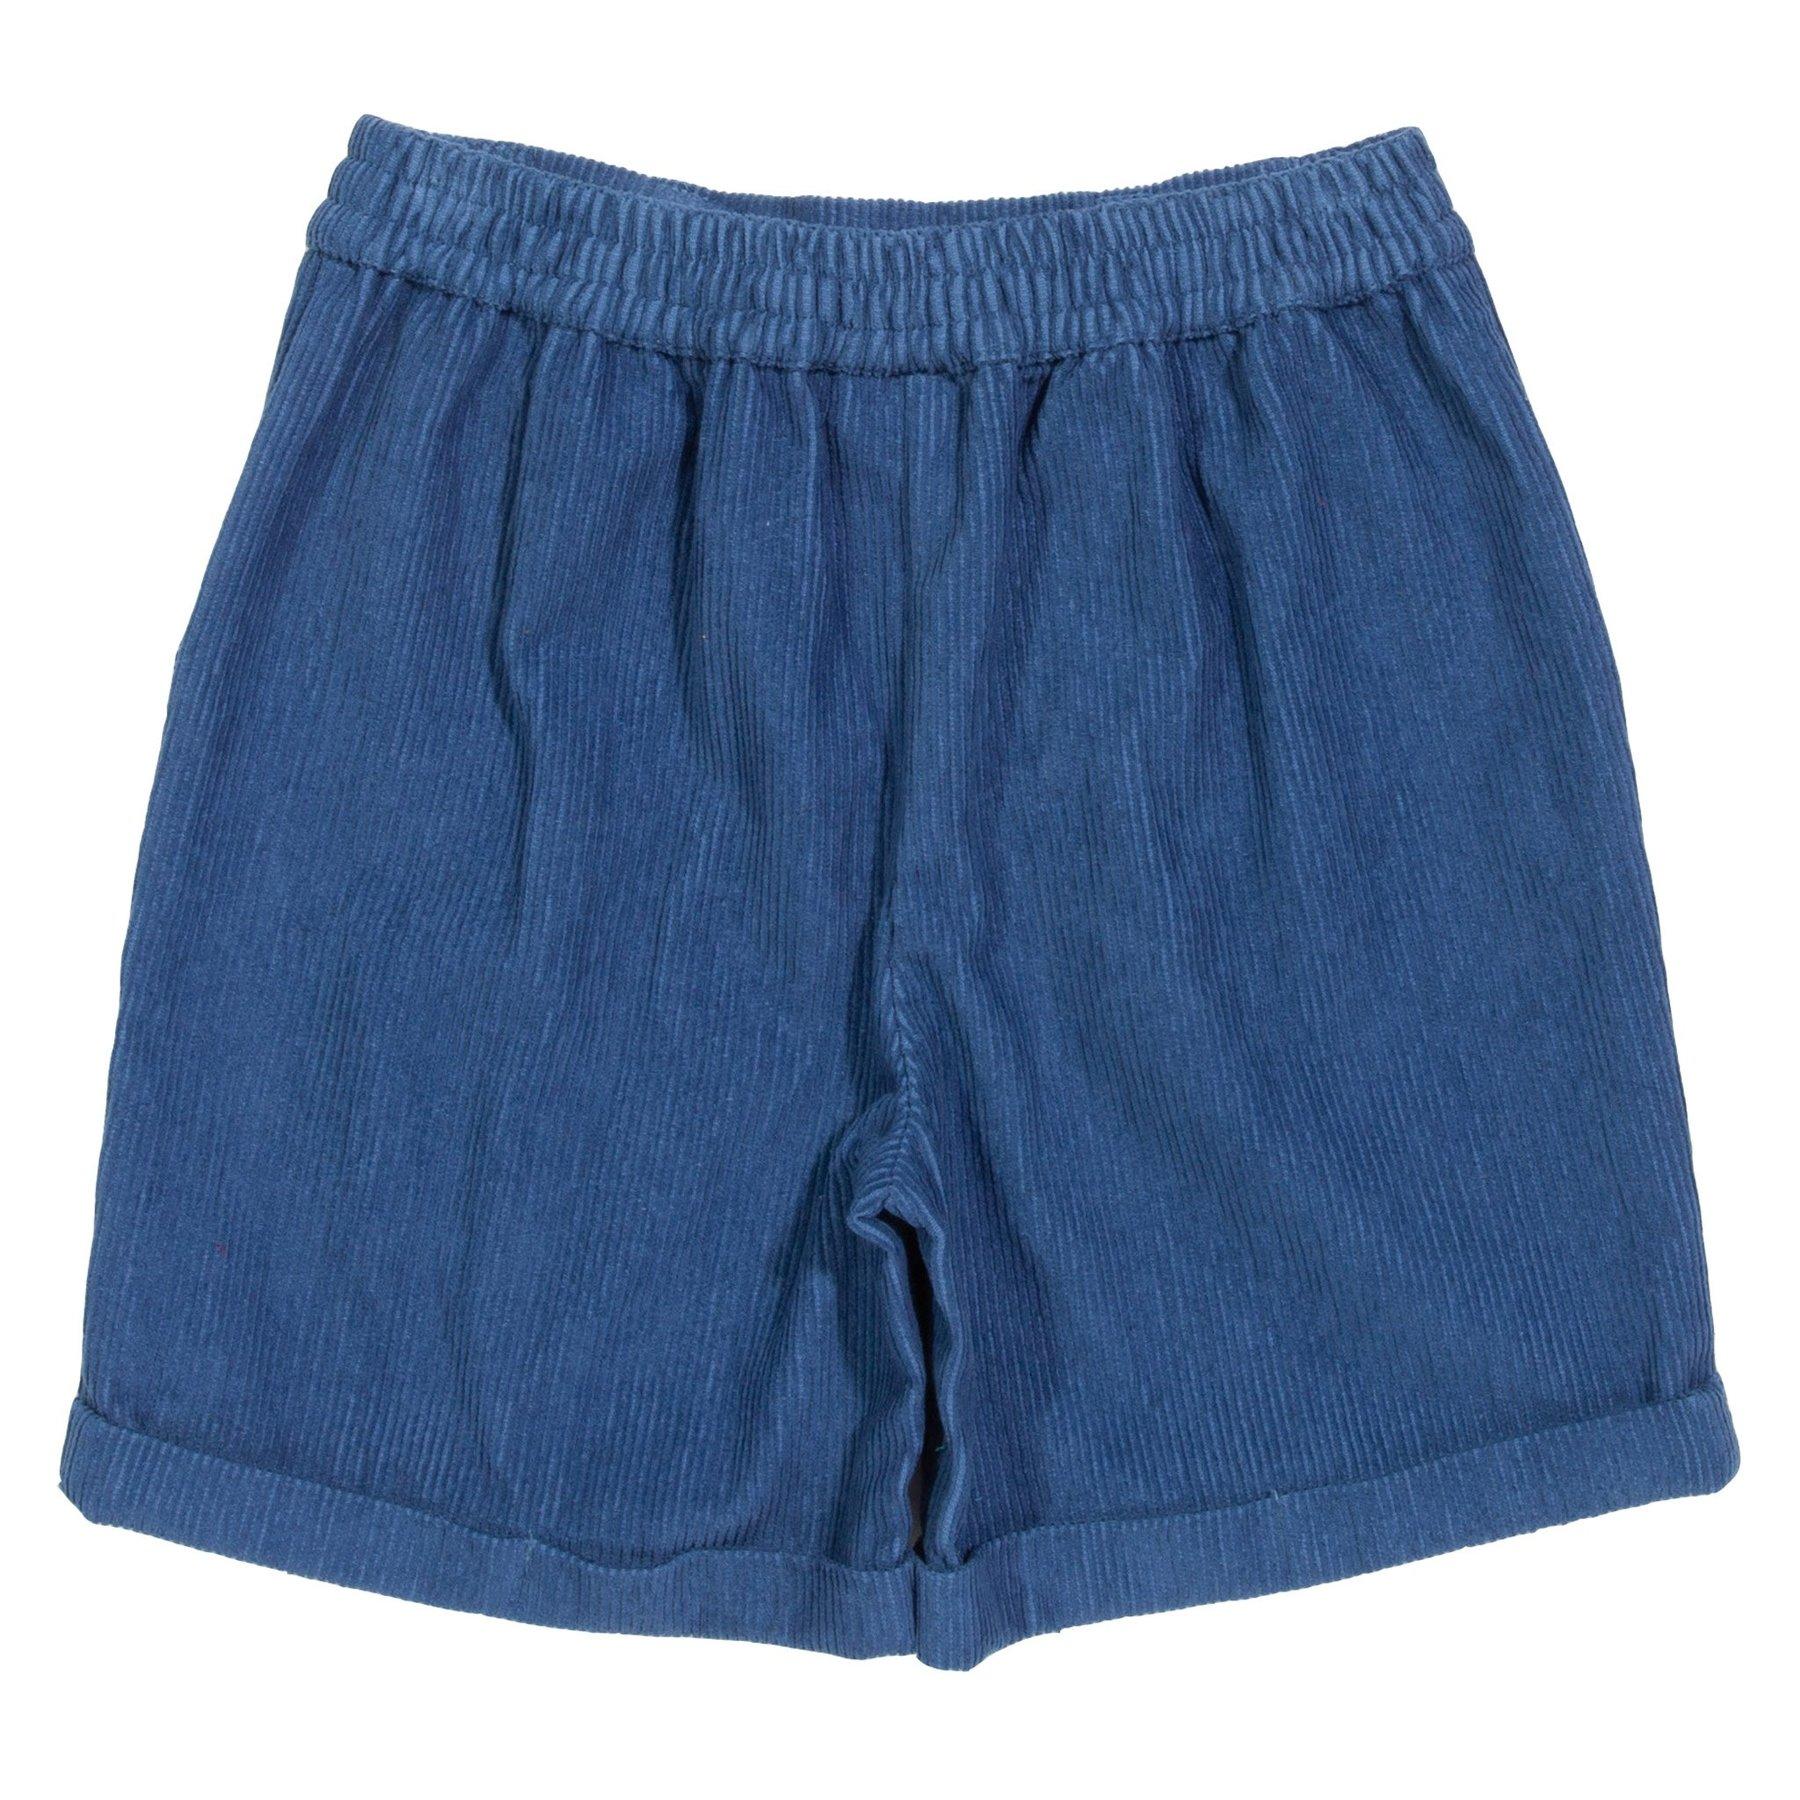 Kite Clothing Cord Shorts back